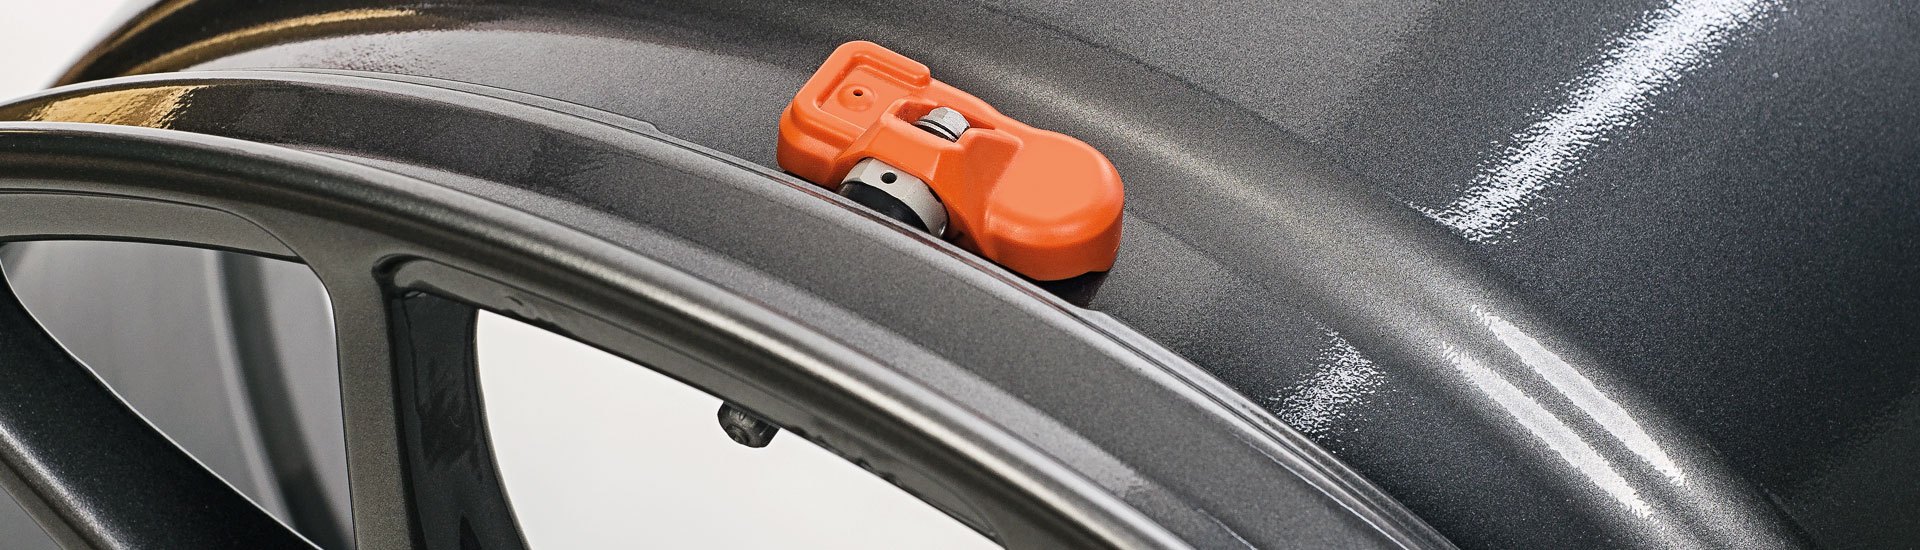 2009 chevy silverado tire pressure monitoring system